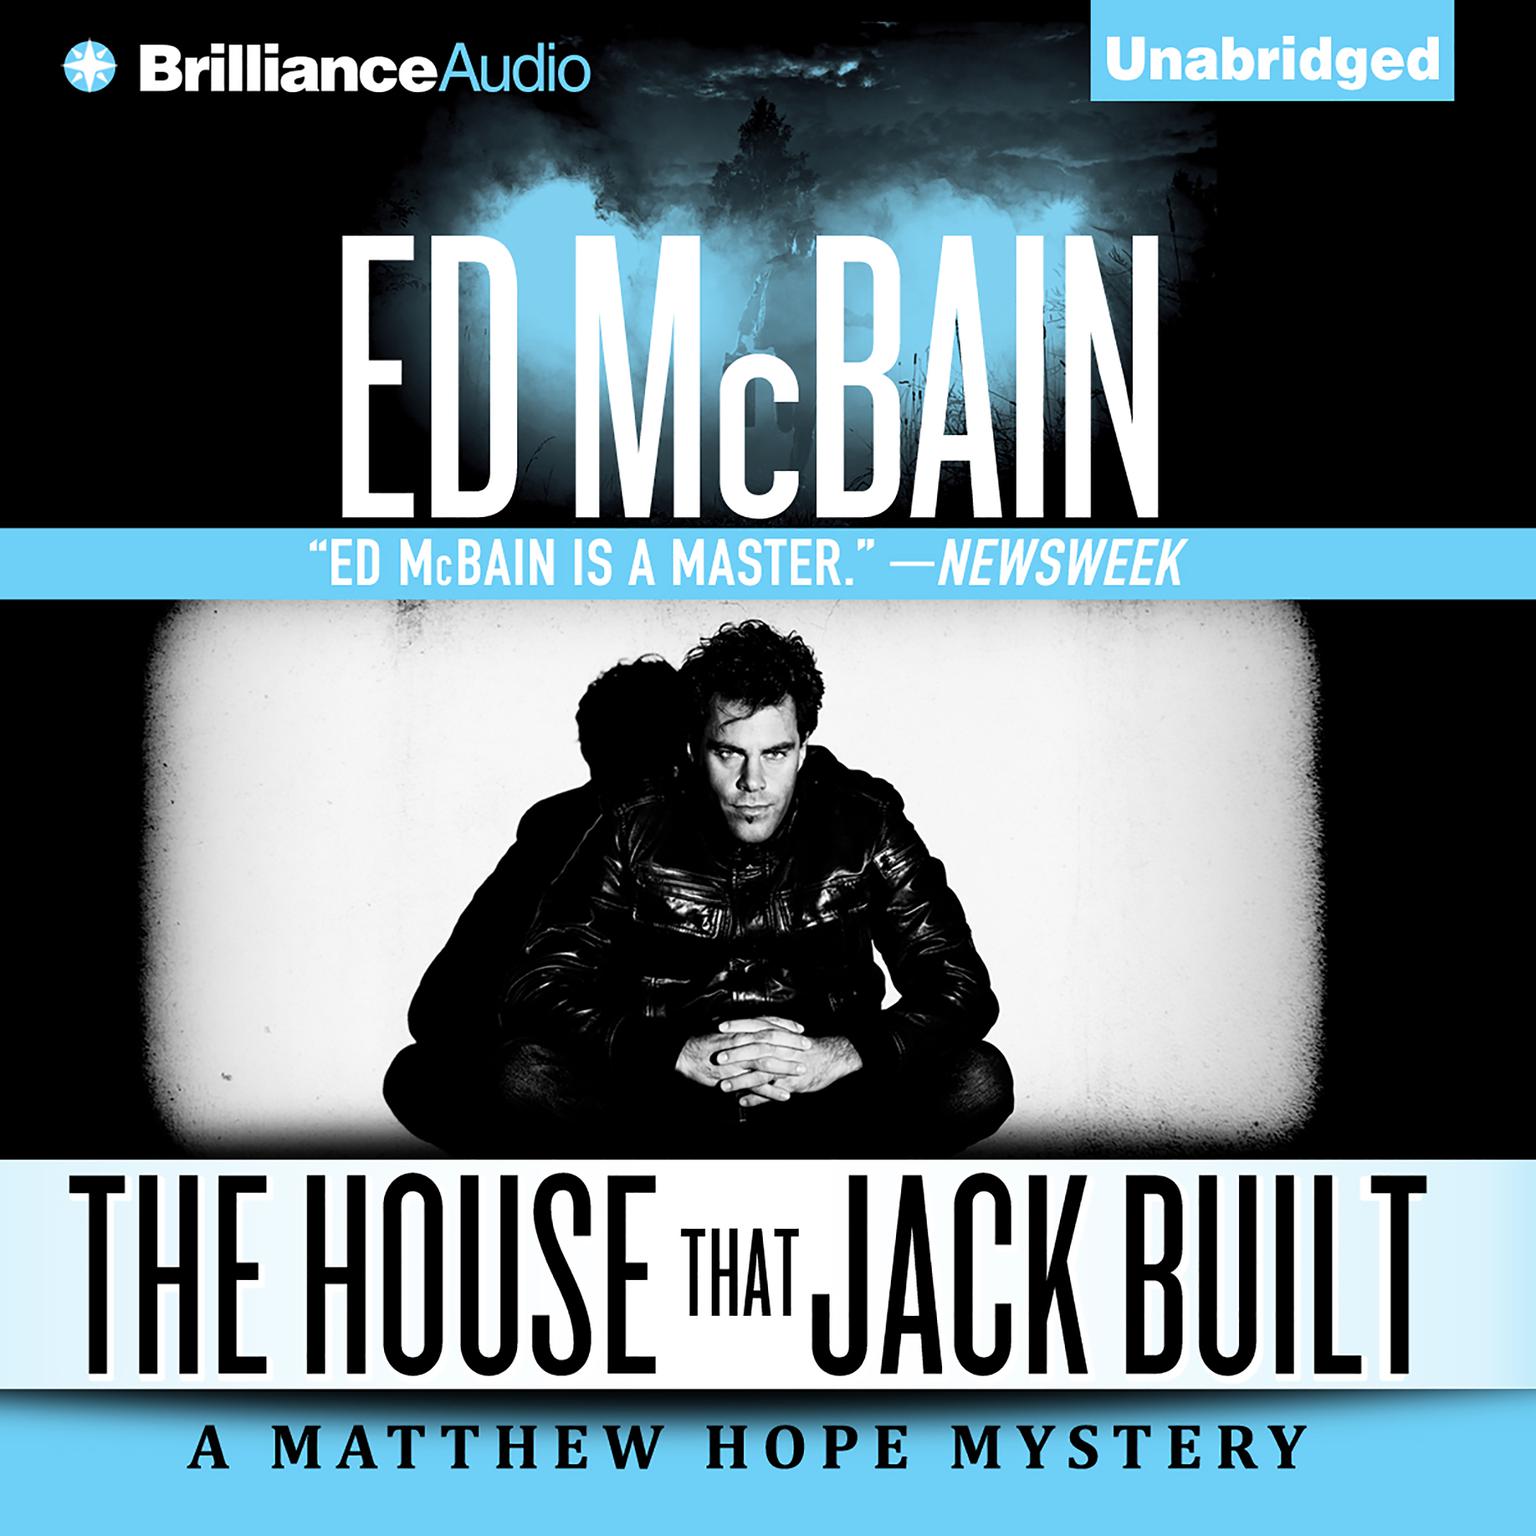 The House that Jack Built Audiobook, by Ed McBain